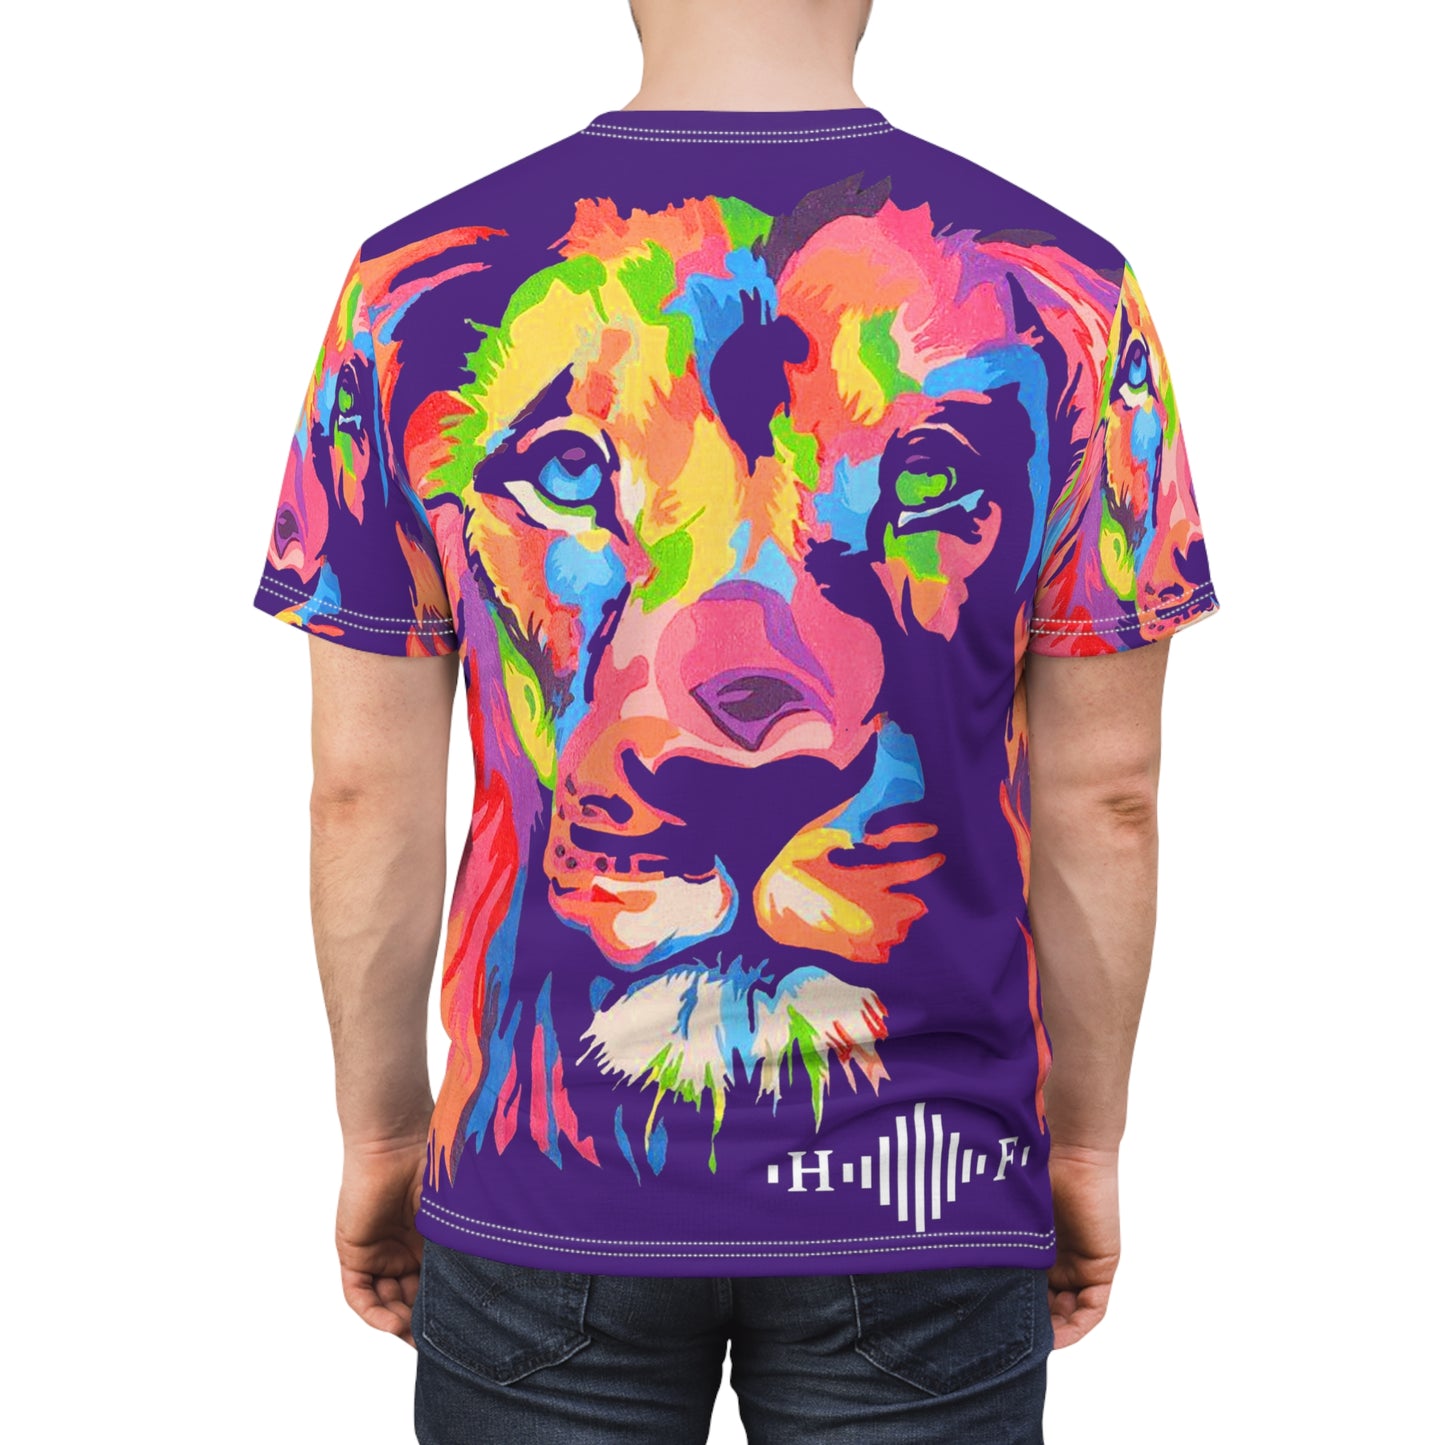 Lionheart (Violet) - T-shirt confort